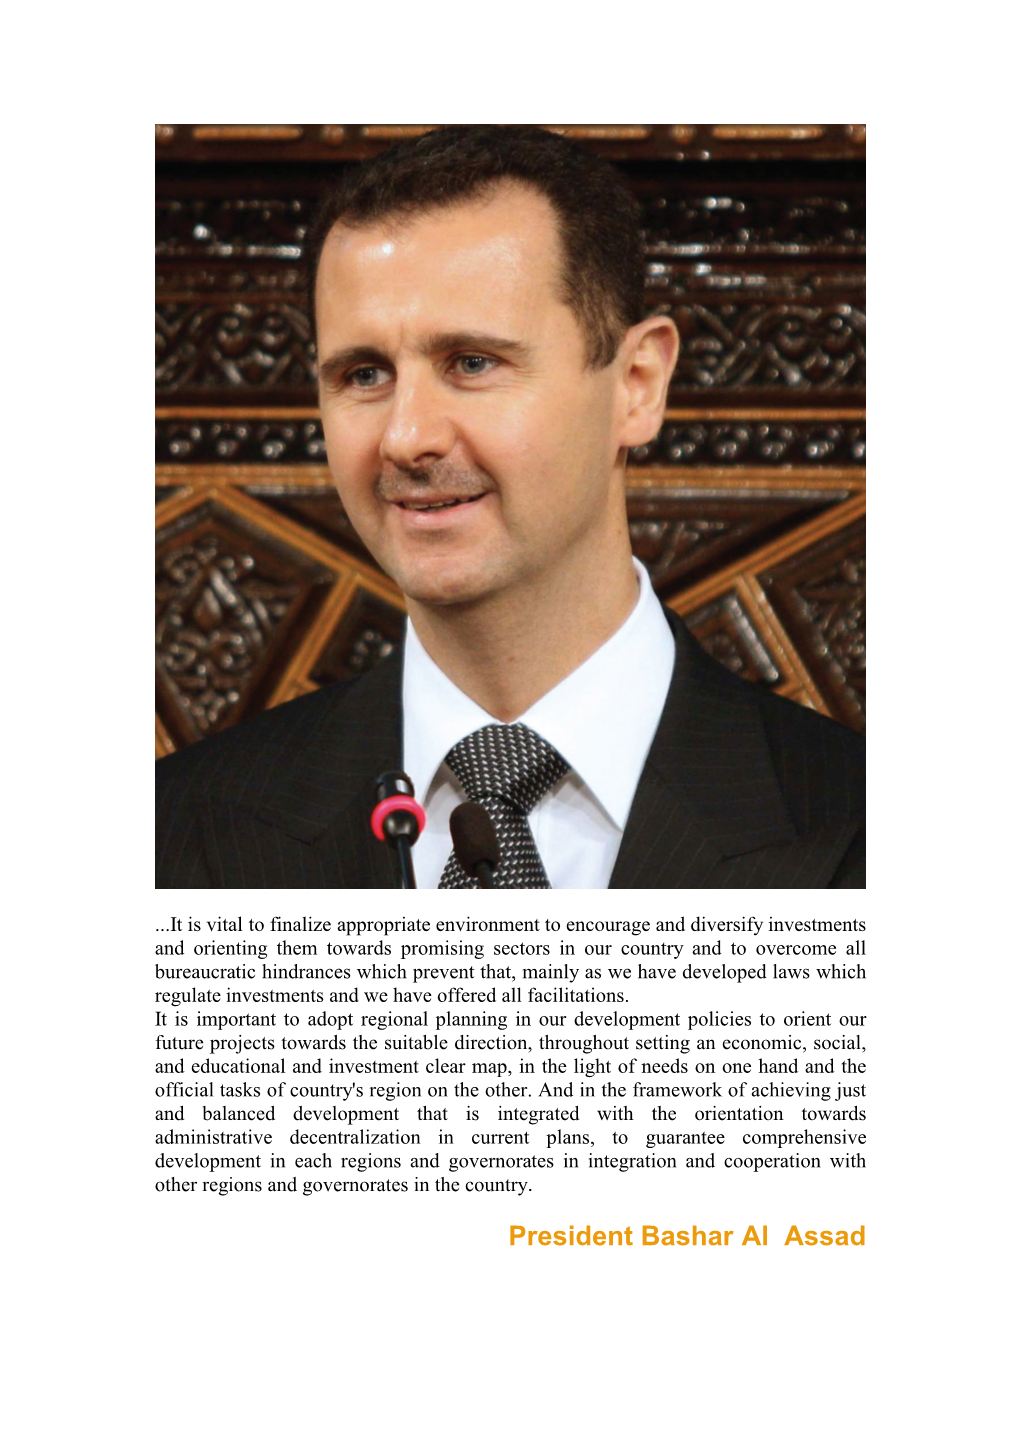 President Bashar Al Assad Preamble